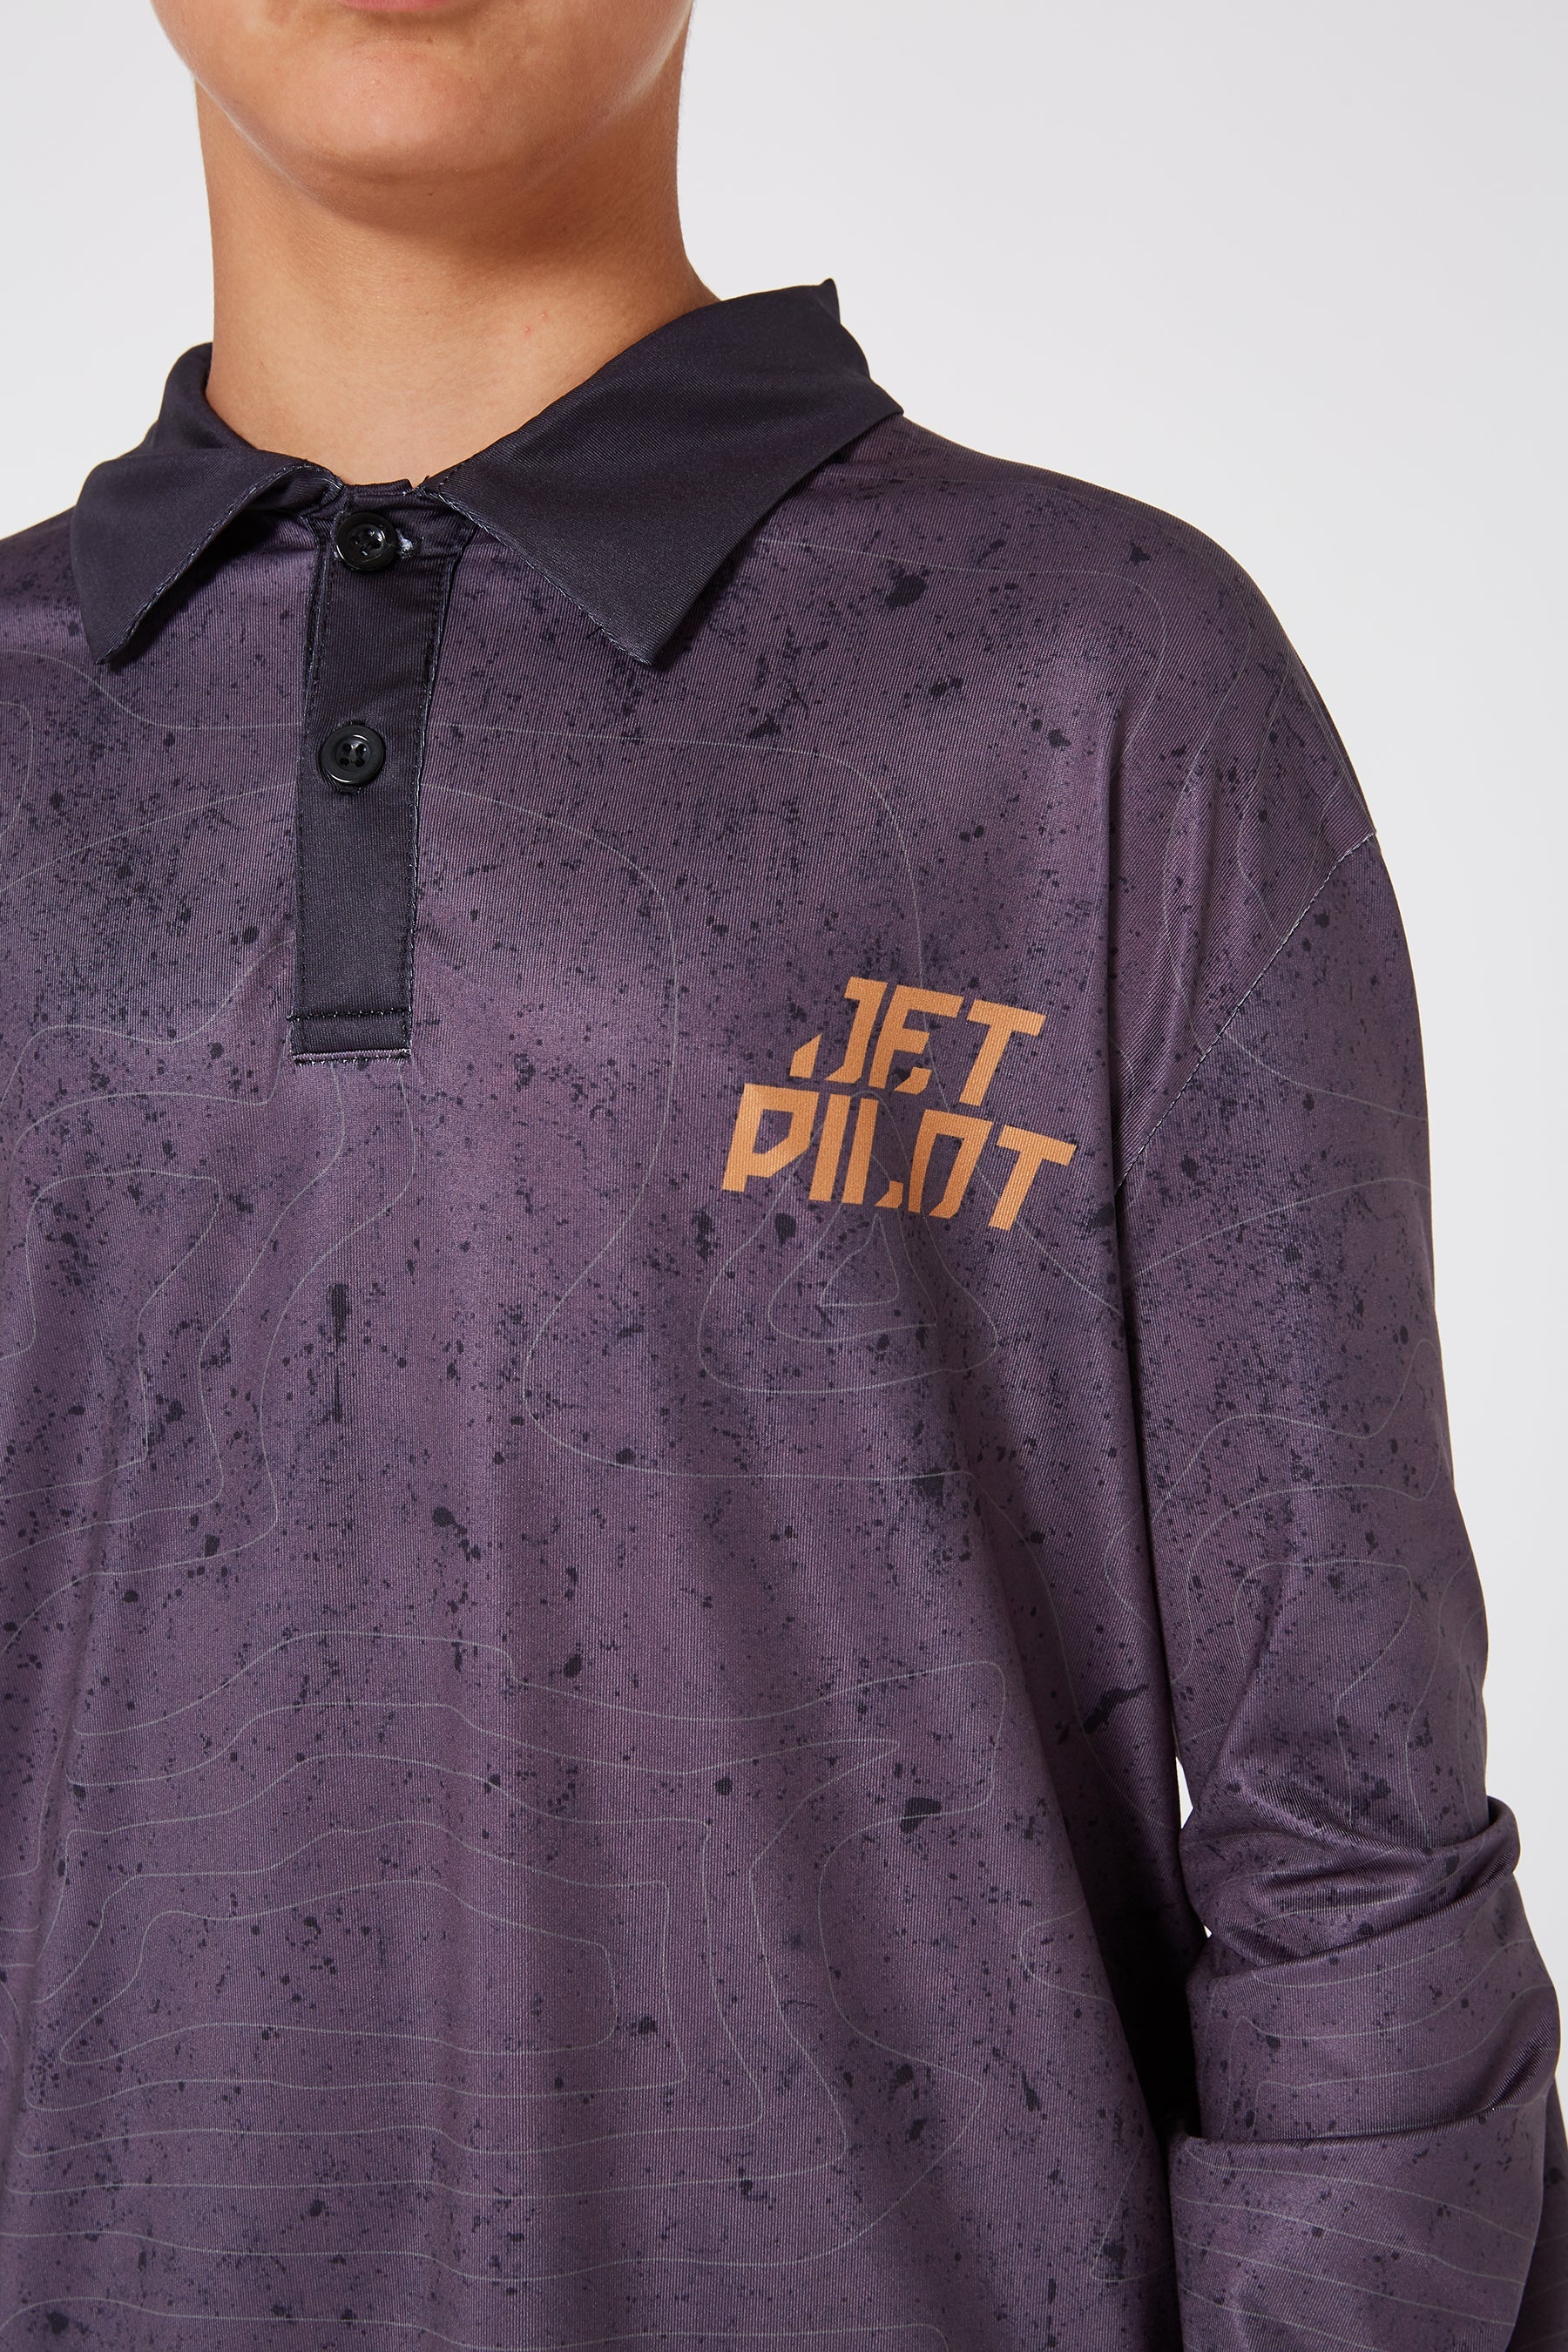 Jetpilot Venture Youth Fishing Shirt - Black Lifestyle 1